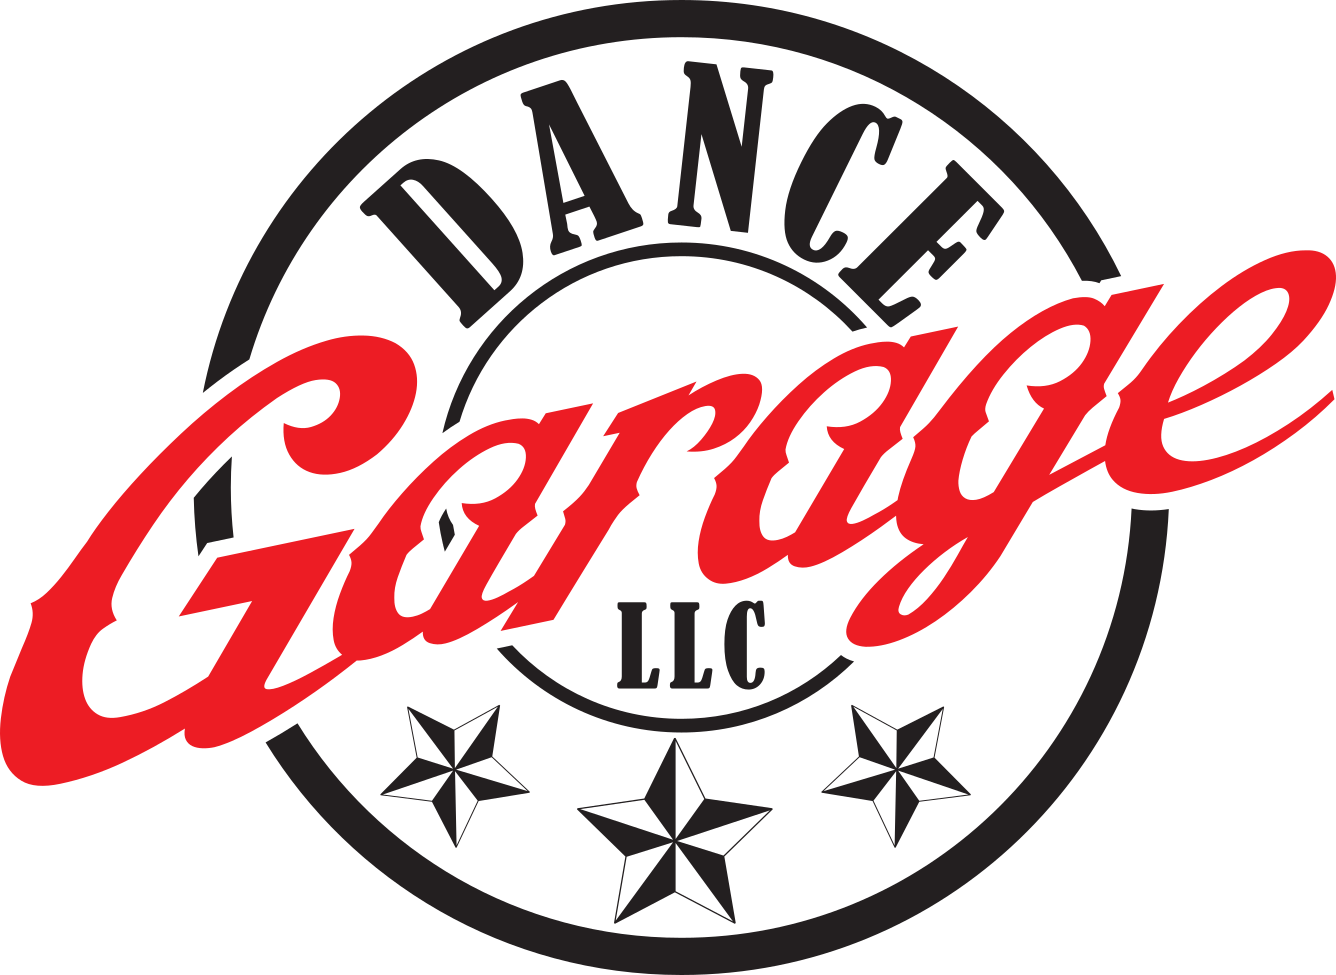 Dance Garage llc